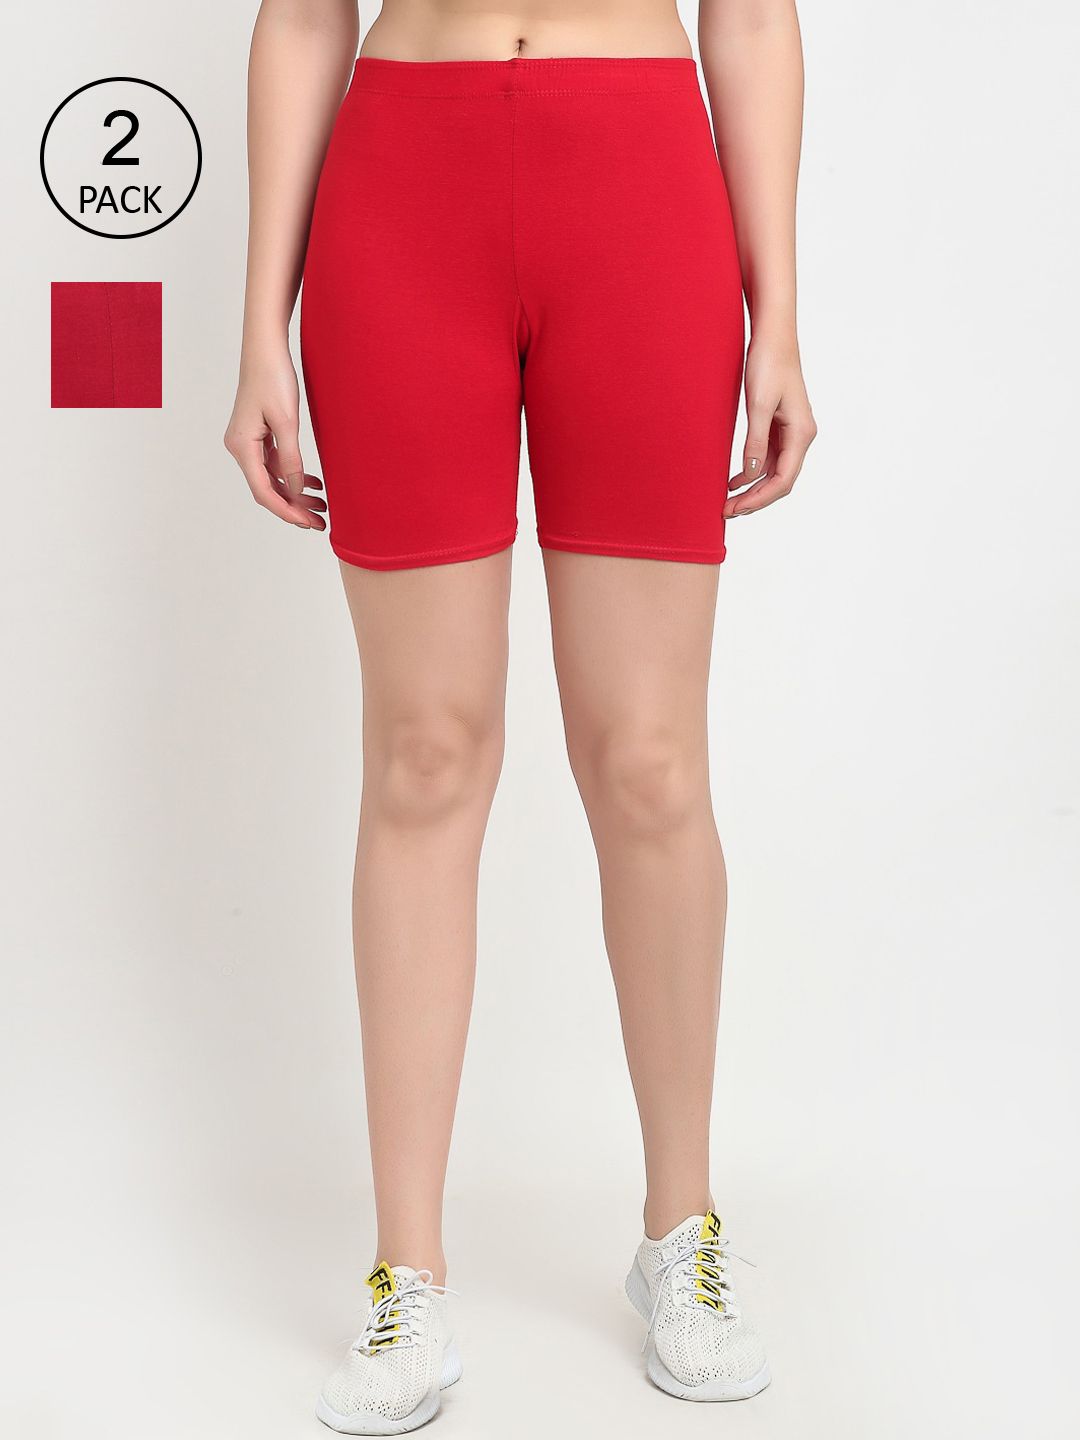 GRACIT Women Red & Maroon Set Of 2 Biker Shorts Price in India